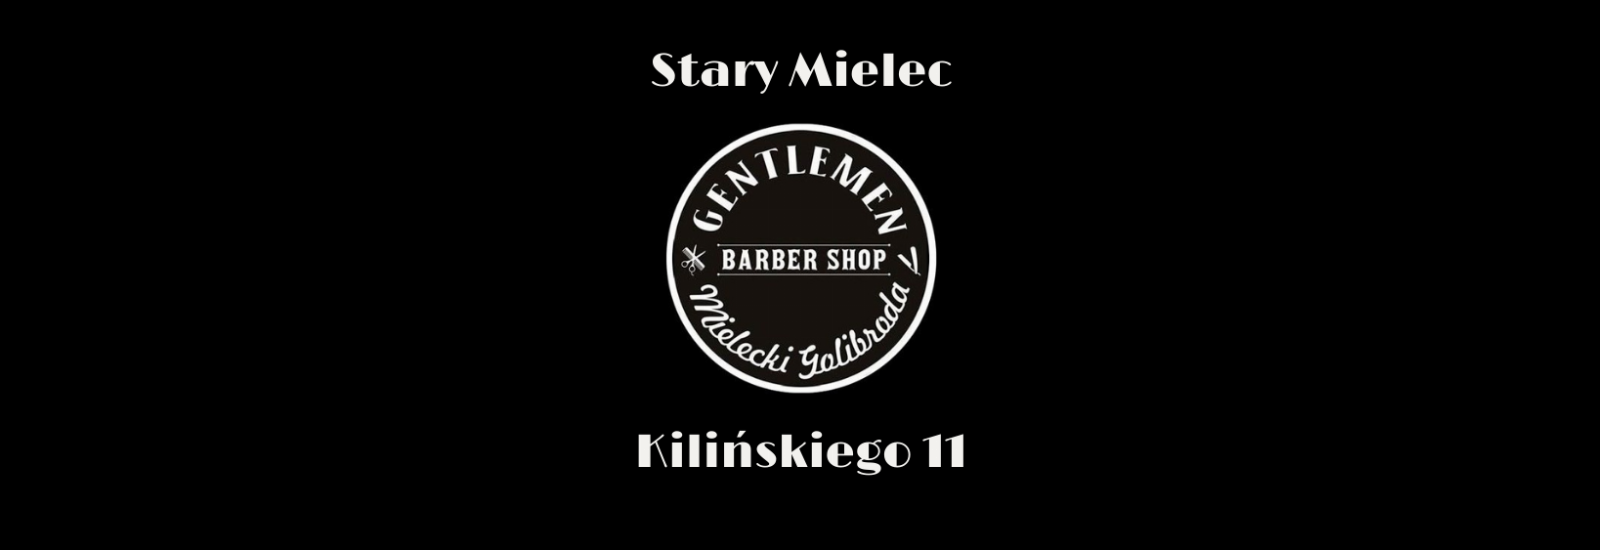 Gentlemen Barber Shop STARY MIELEC, Mielec, smoczka